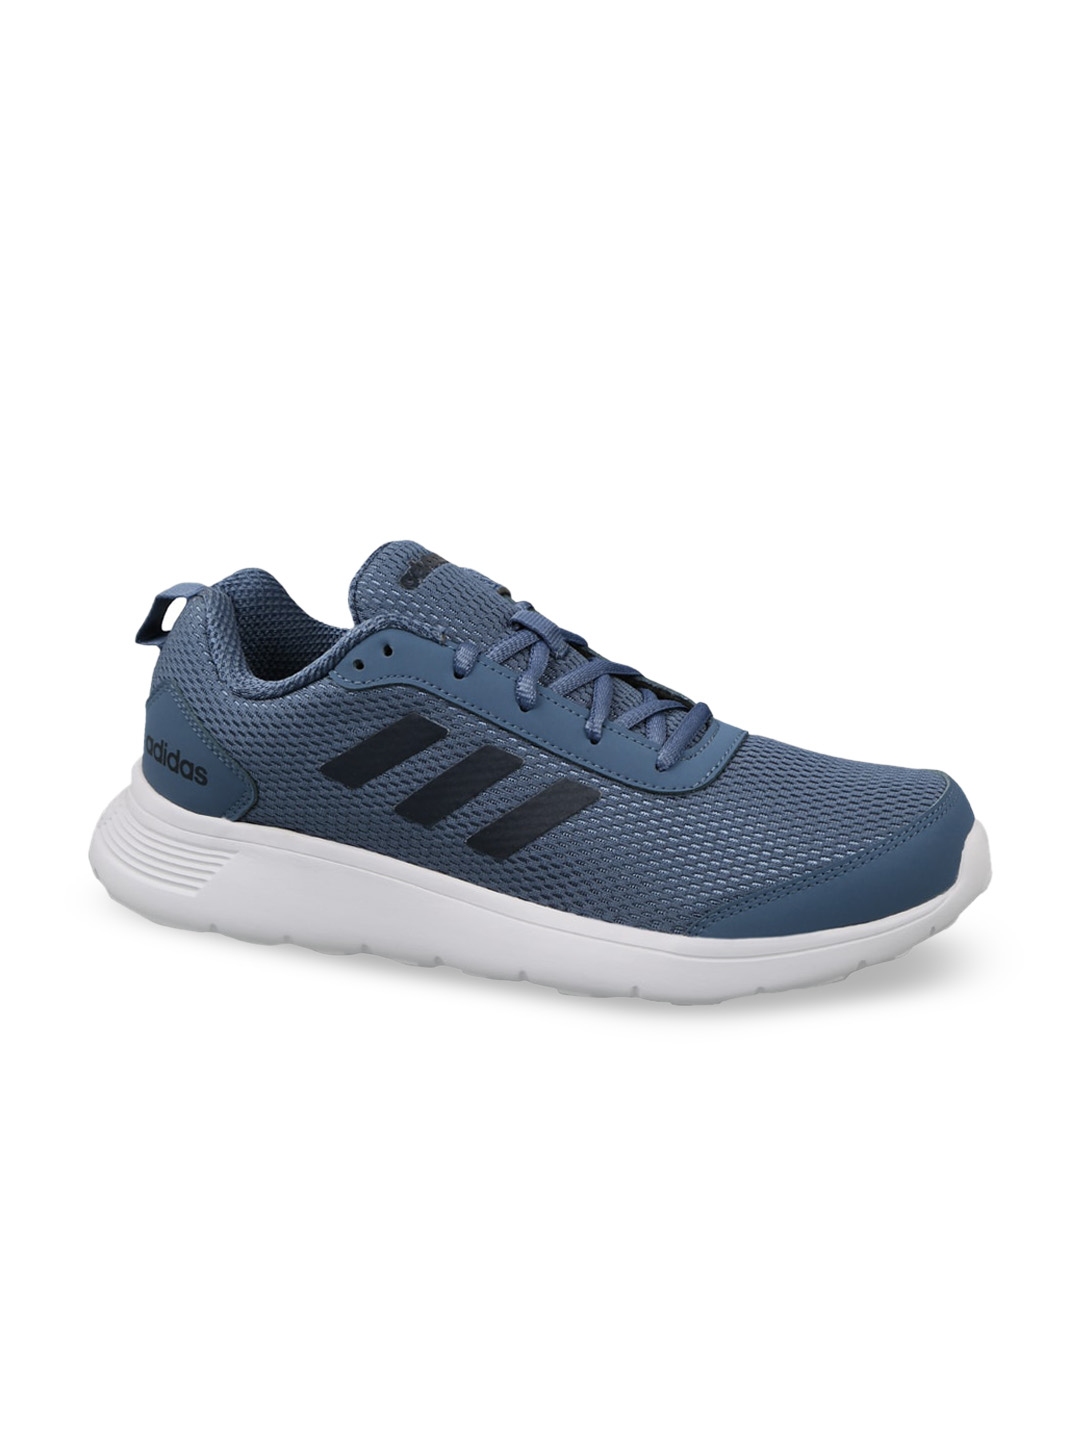 Buy ADIDAS Men Blue Mesh Running Shoes - Sports Shoes for Men 14019858 ...